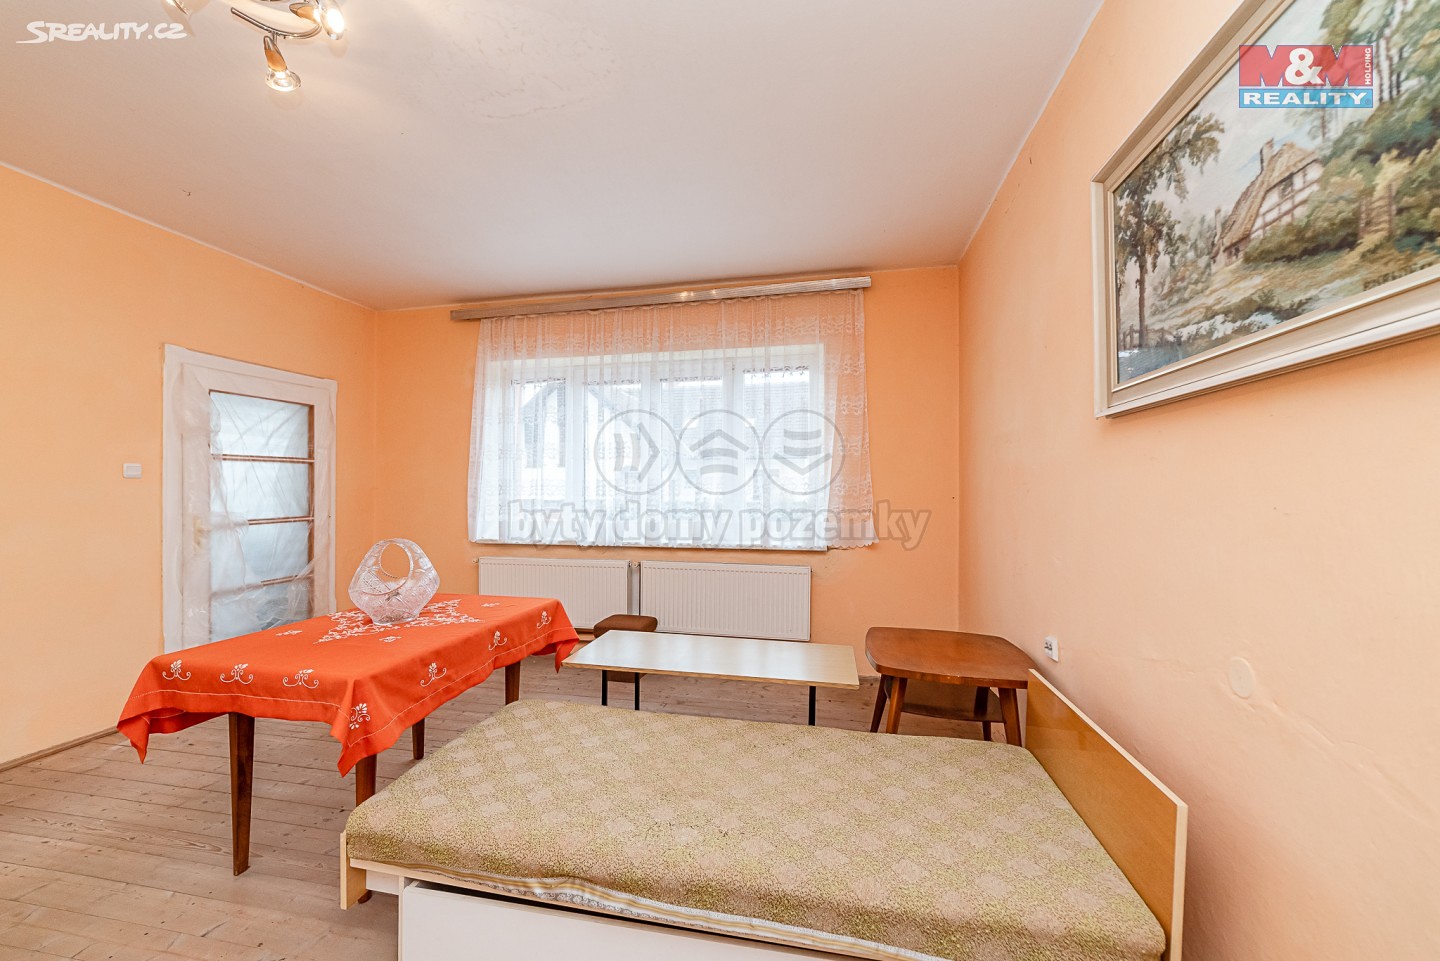 Prodej  rodinného domu 80 m², pozemek 103 m², Dobronín, okres Jihlava